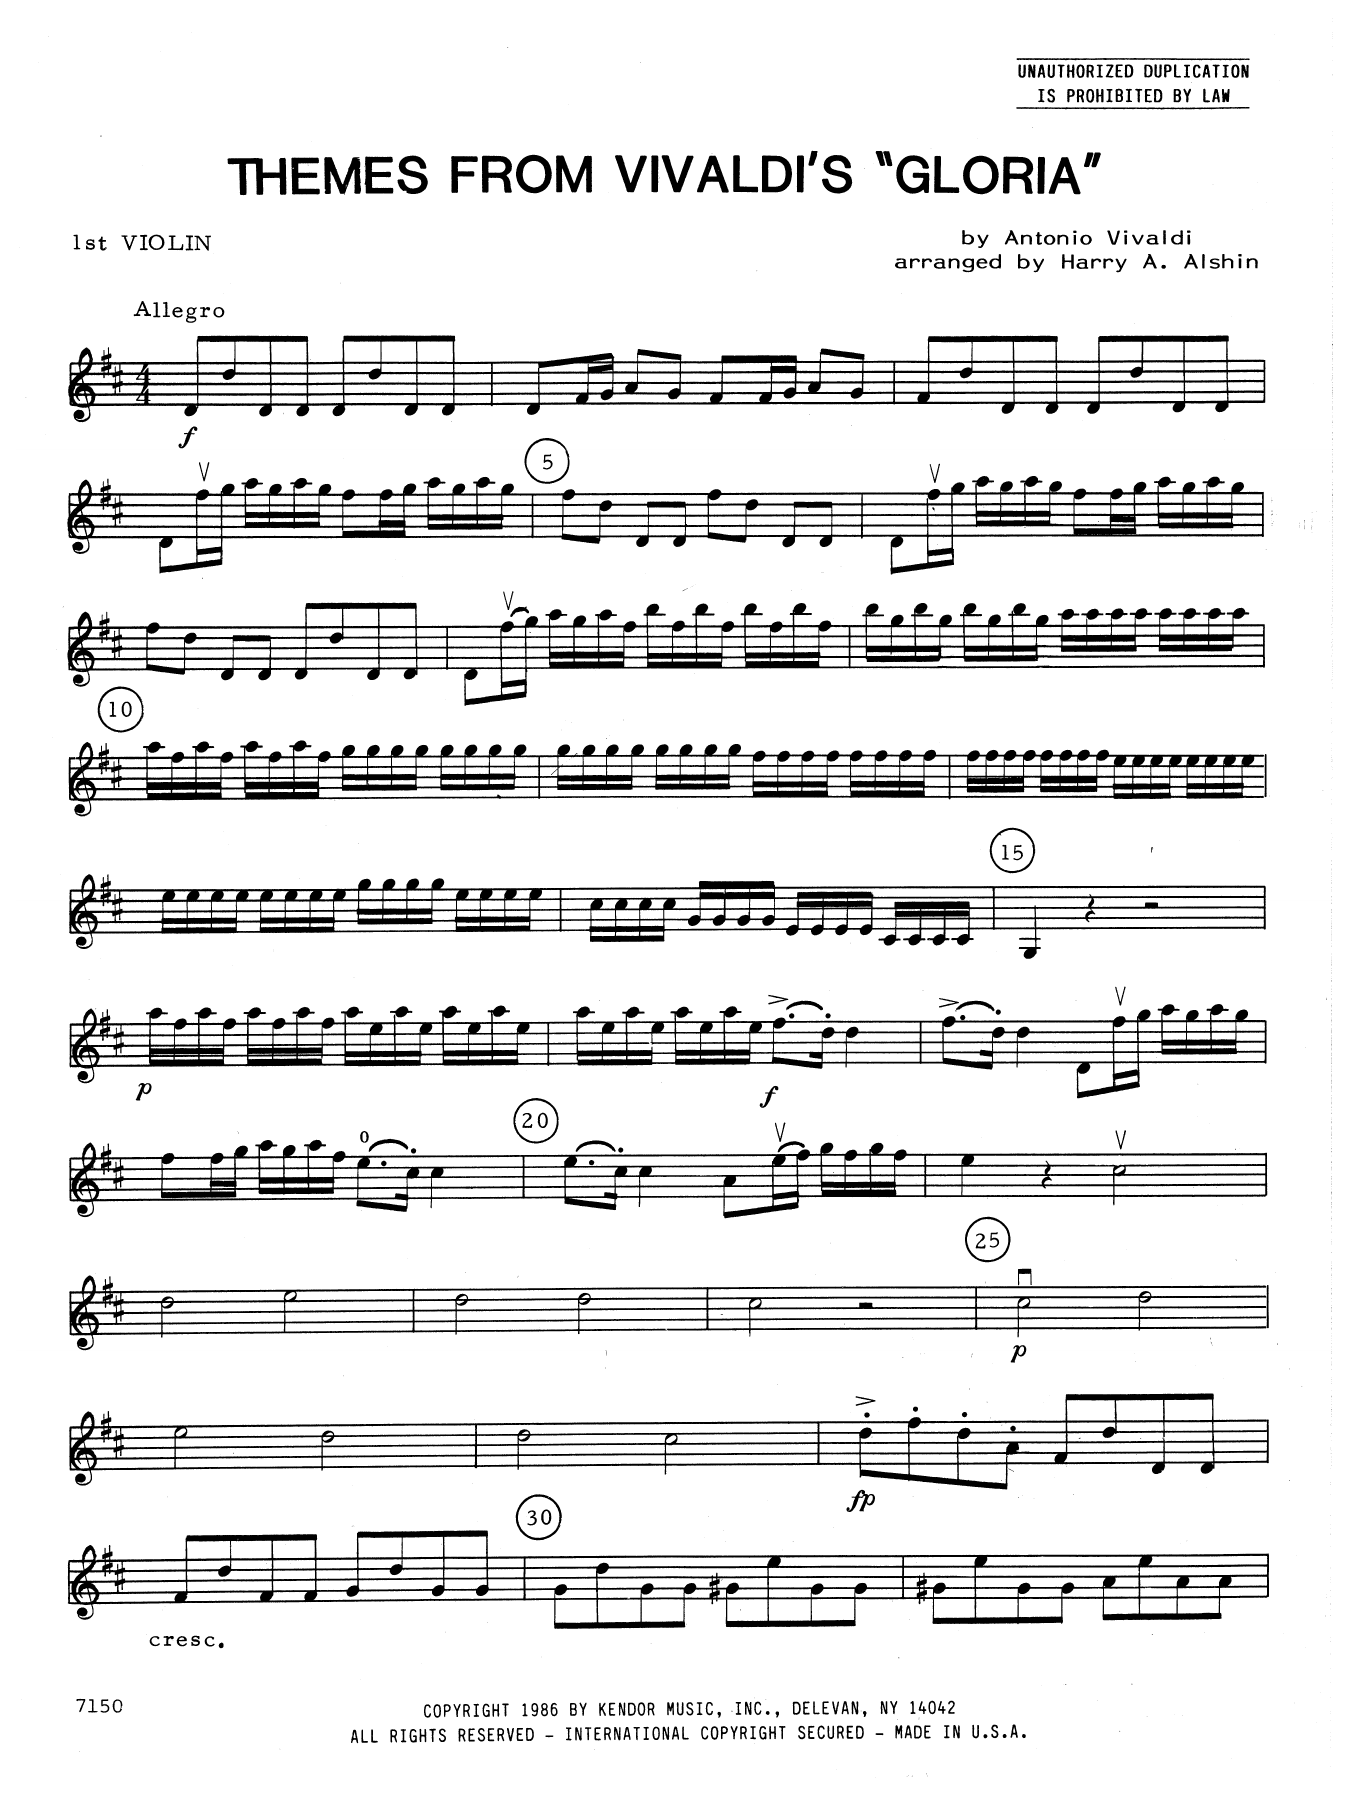 Download Alshin Themes From Vivaldi's Gloria - 1st Viol Sheet Music